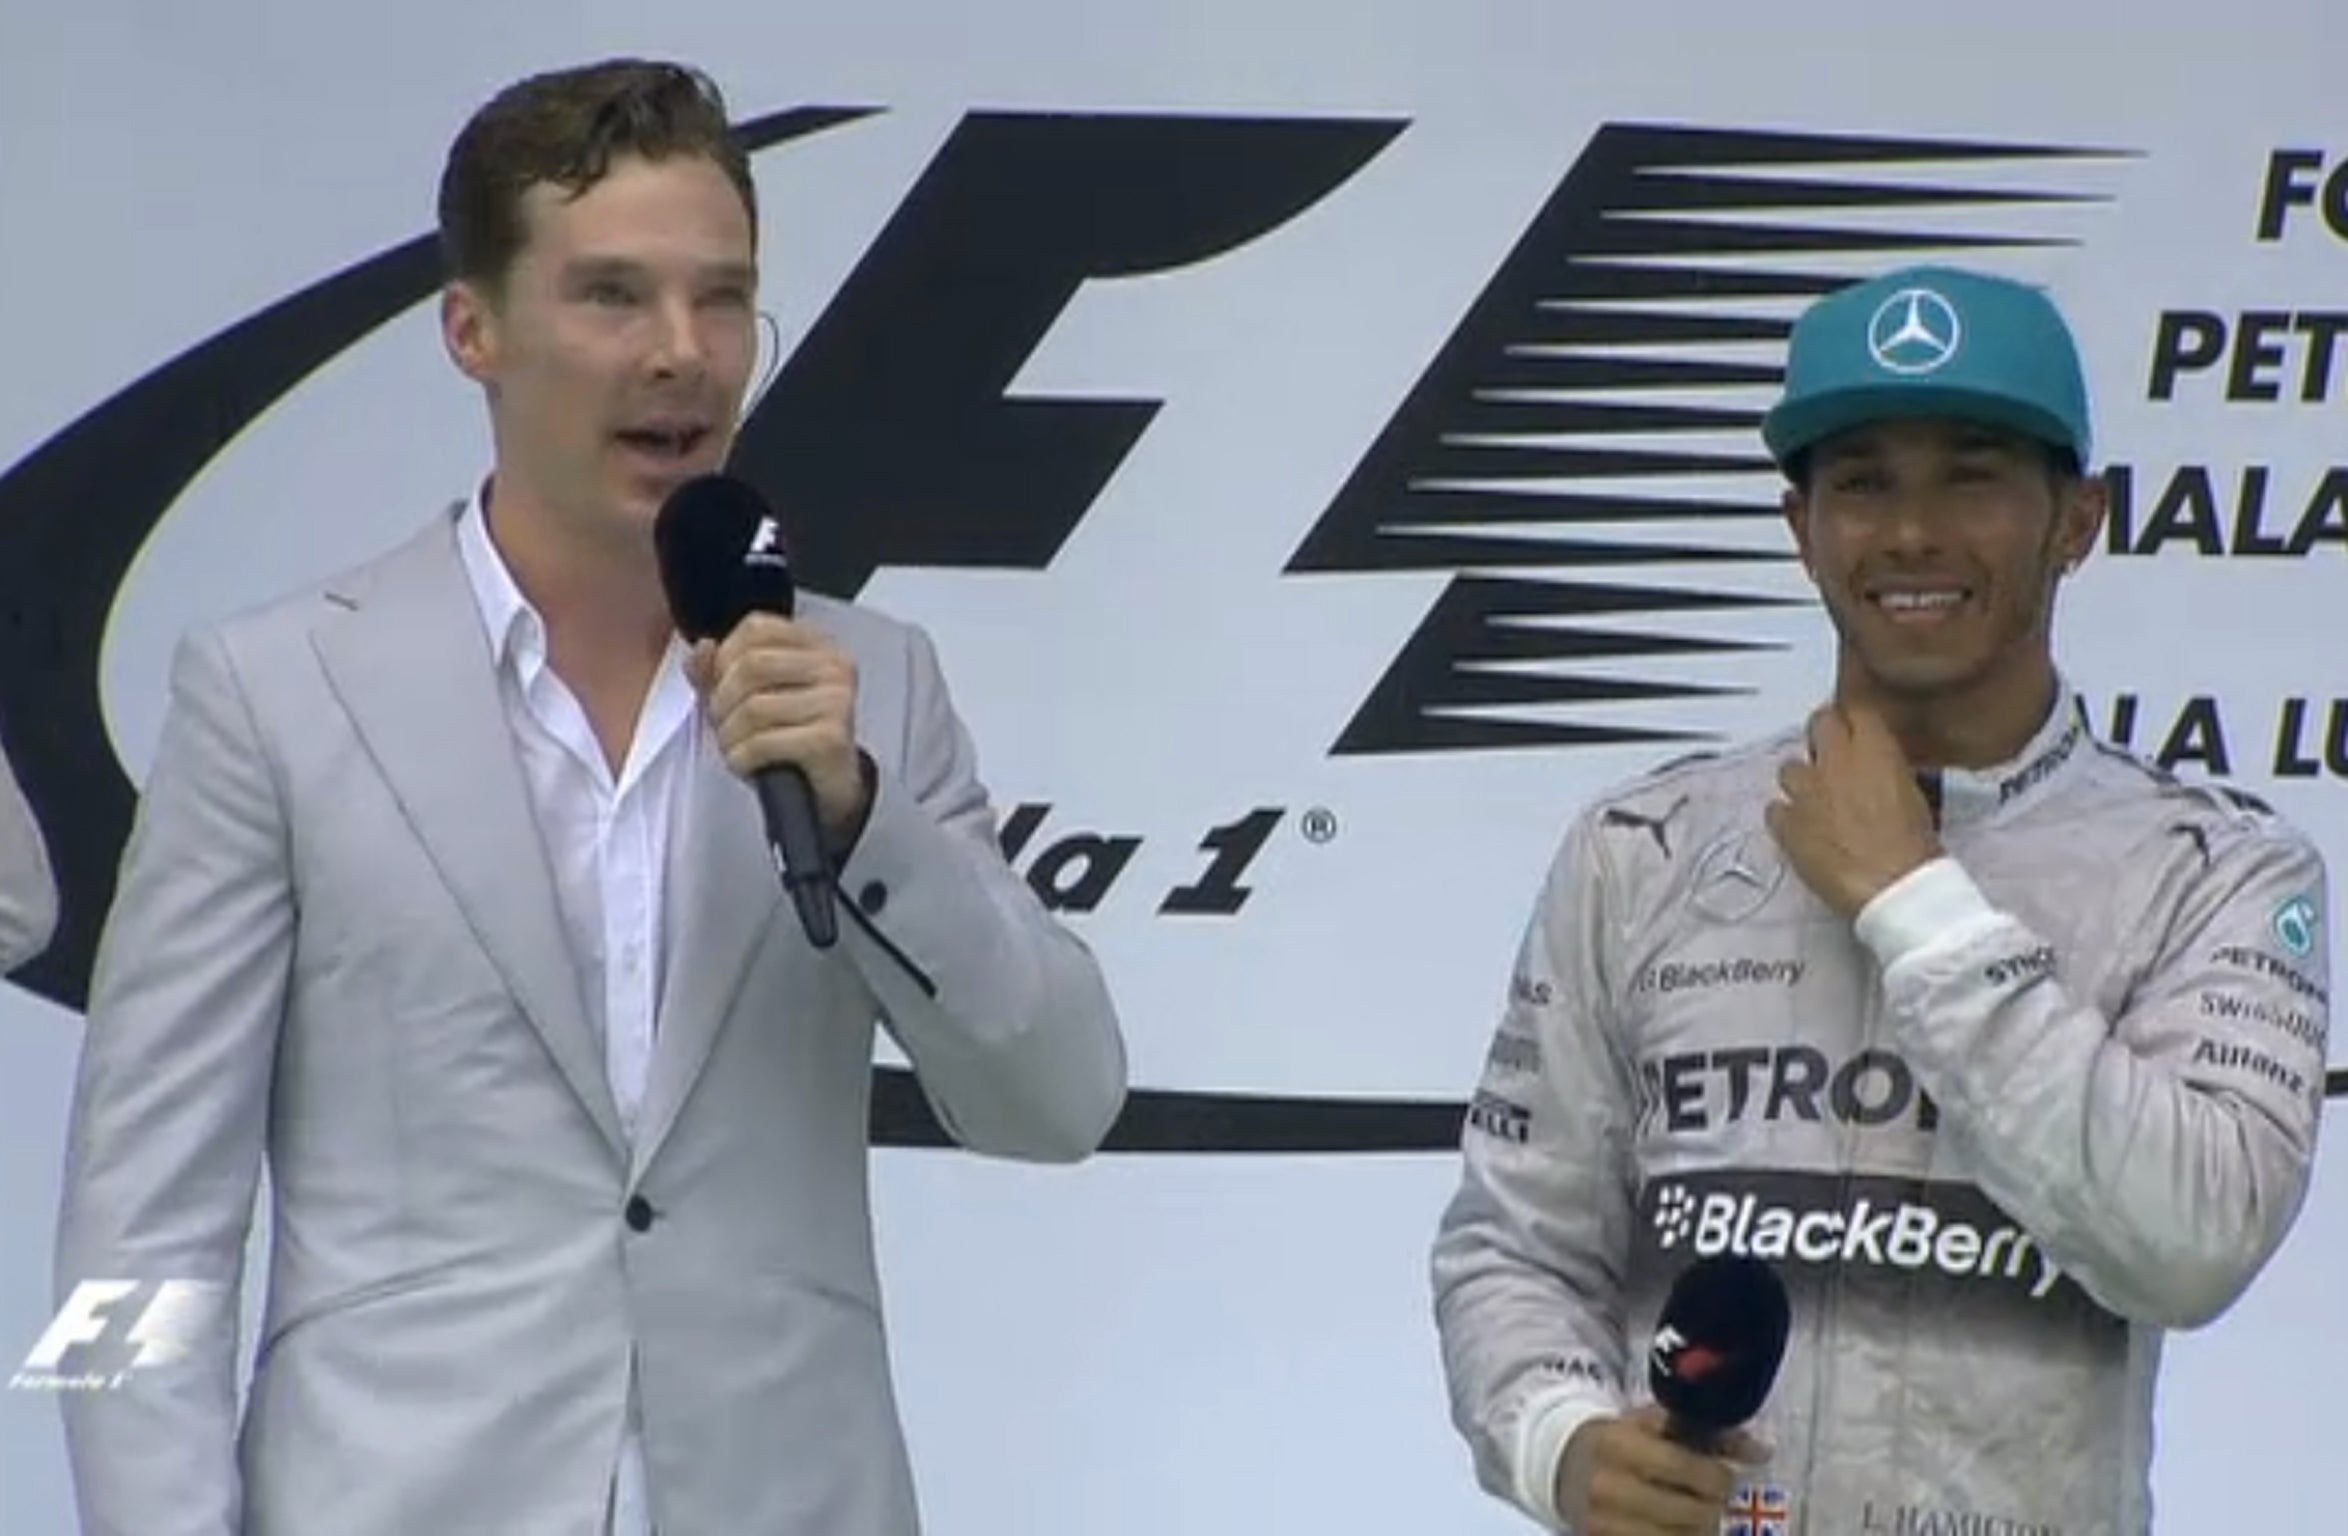 Sherlock star Benedict Cumberbatch interviews Lewis Hamilton on the podium following the Mercedes driver's Malaysian GP victory